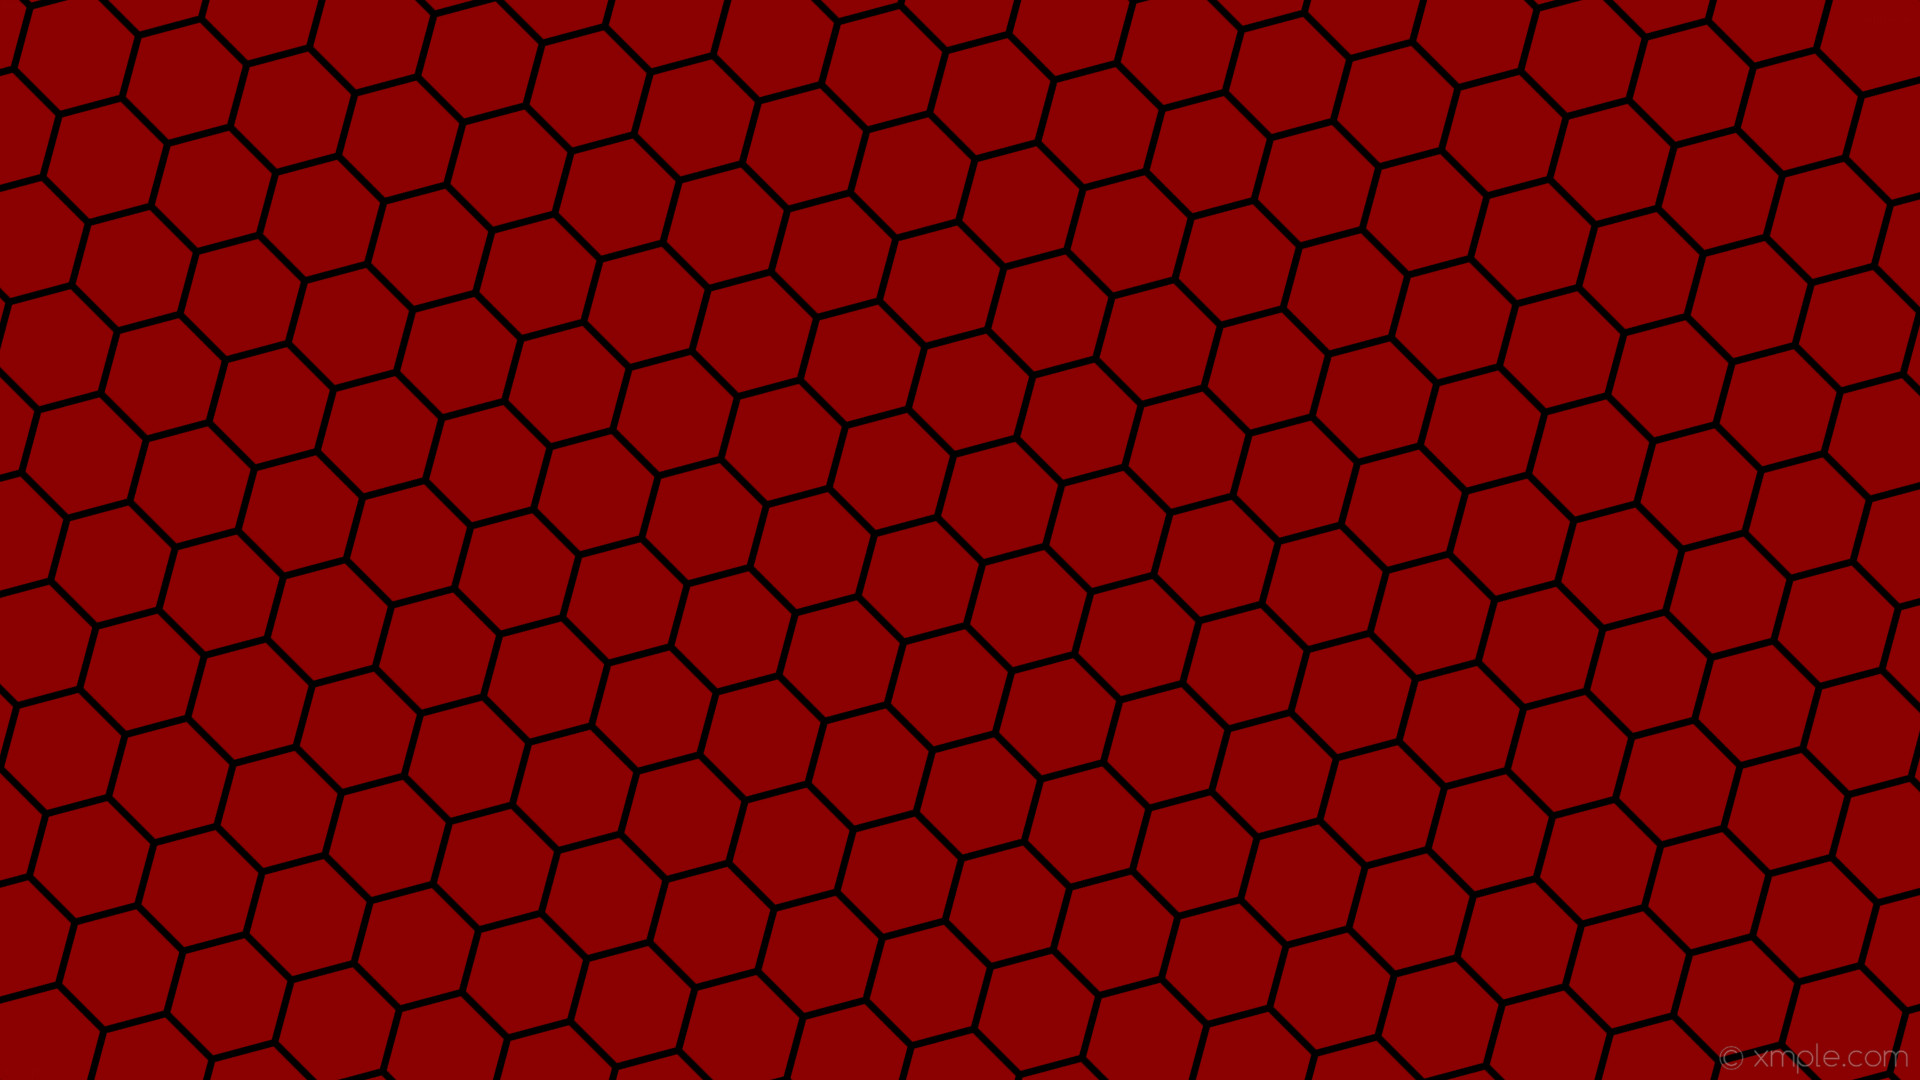 1920x1080 wallpaper beehive red black honeycomb hexagon dark red #8b0000 #000000  diagonal 45Â° 7px